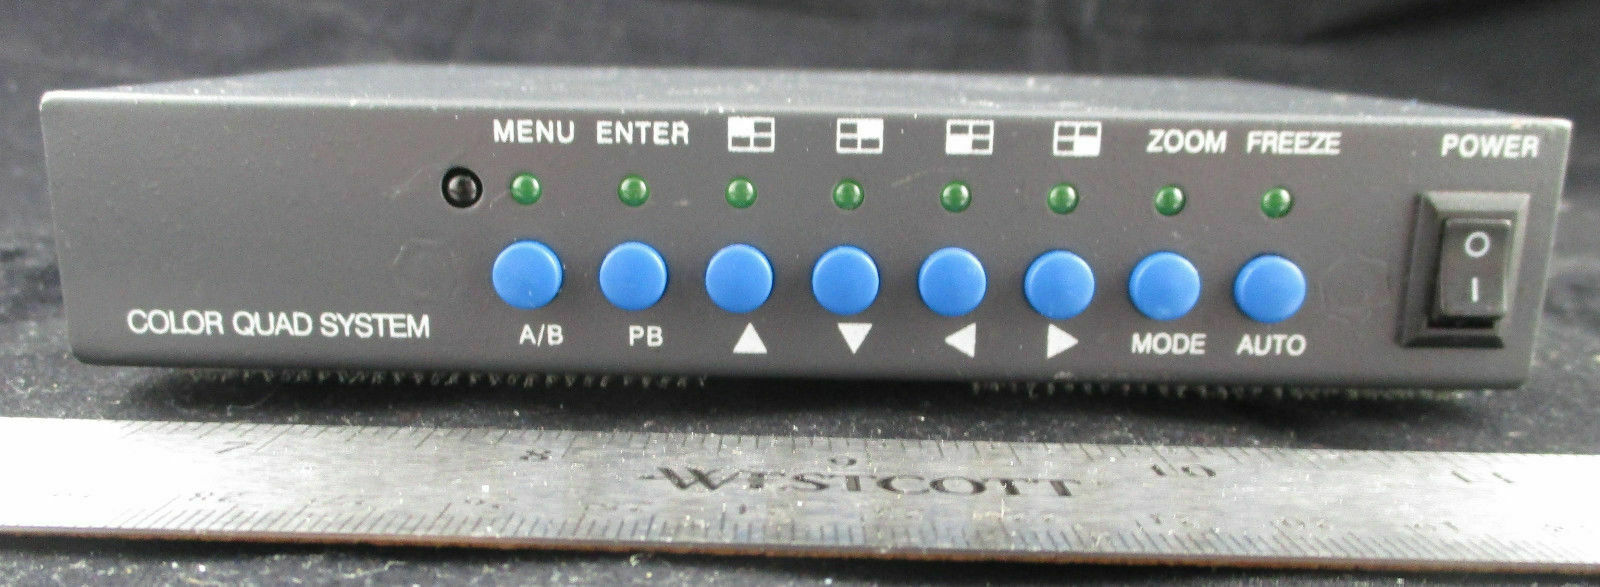 VONNIC A2816 COLOR 4 Channel QUAD SYSTEM Remote Control DC 12V 1A 814927010956